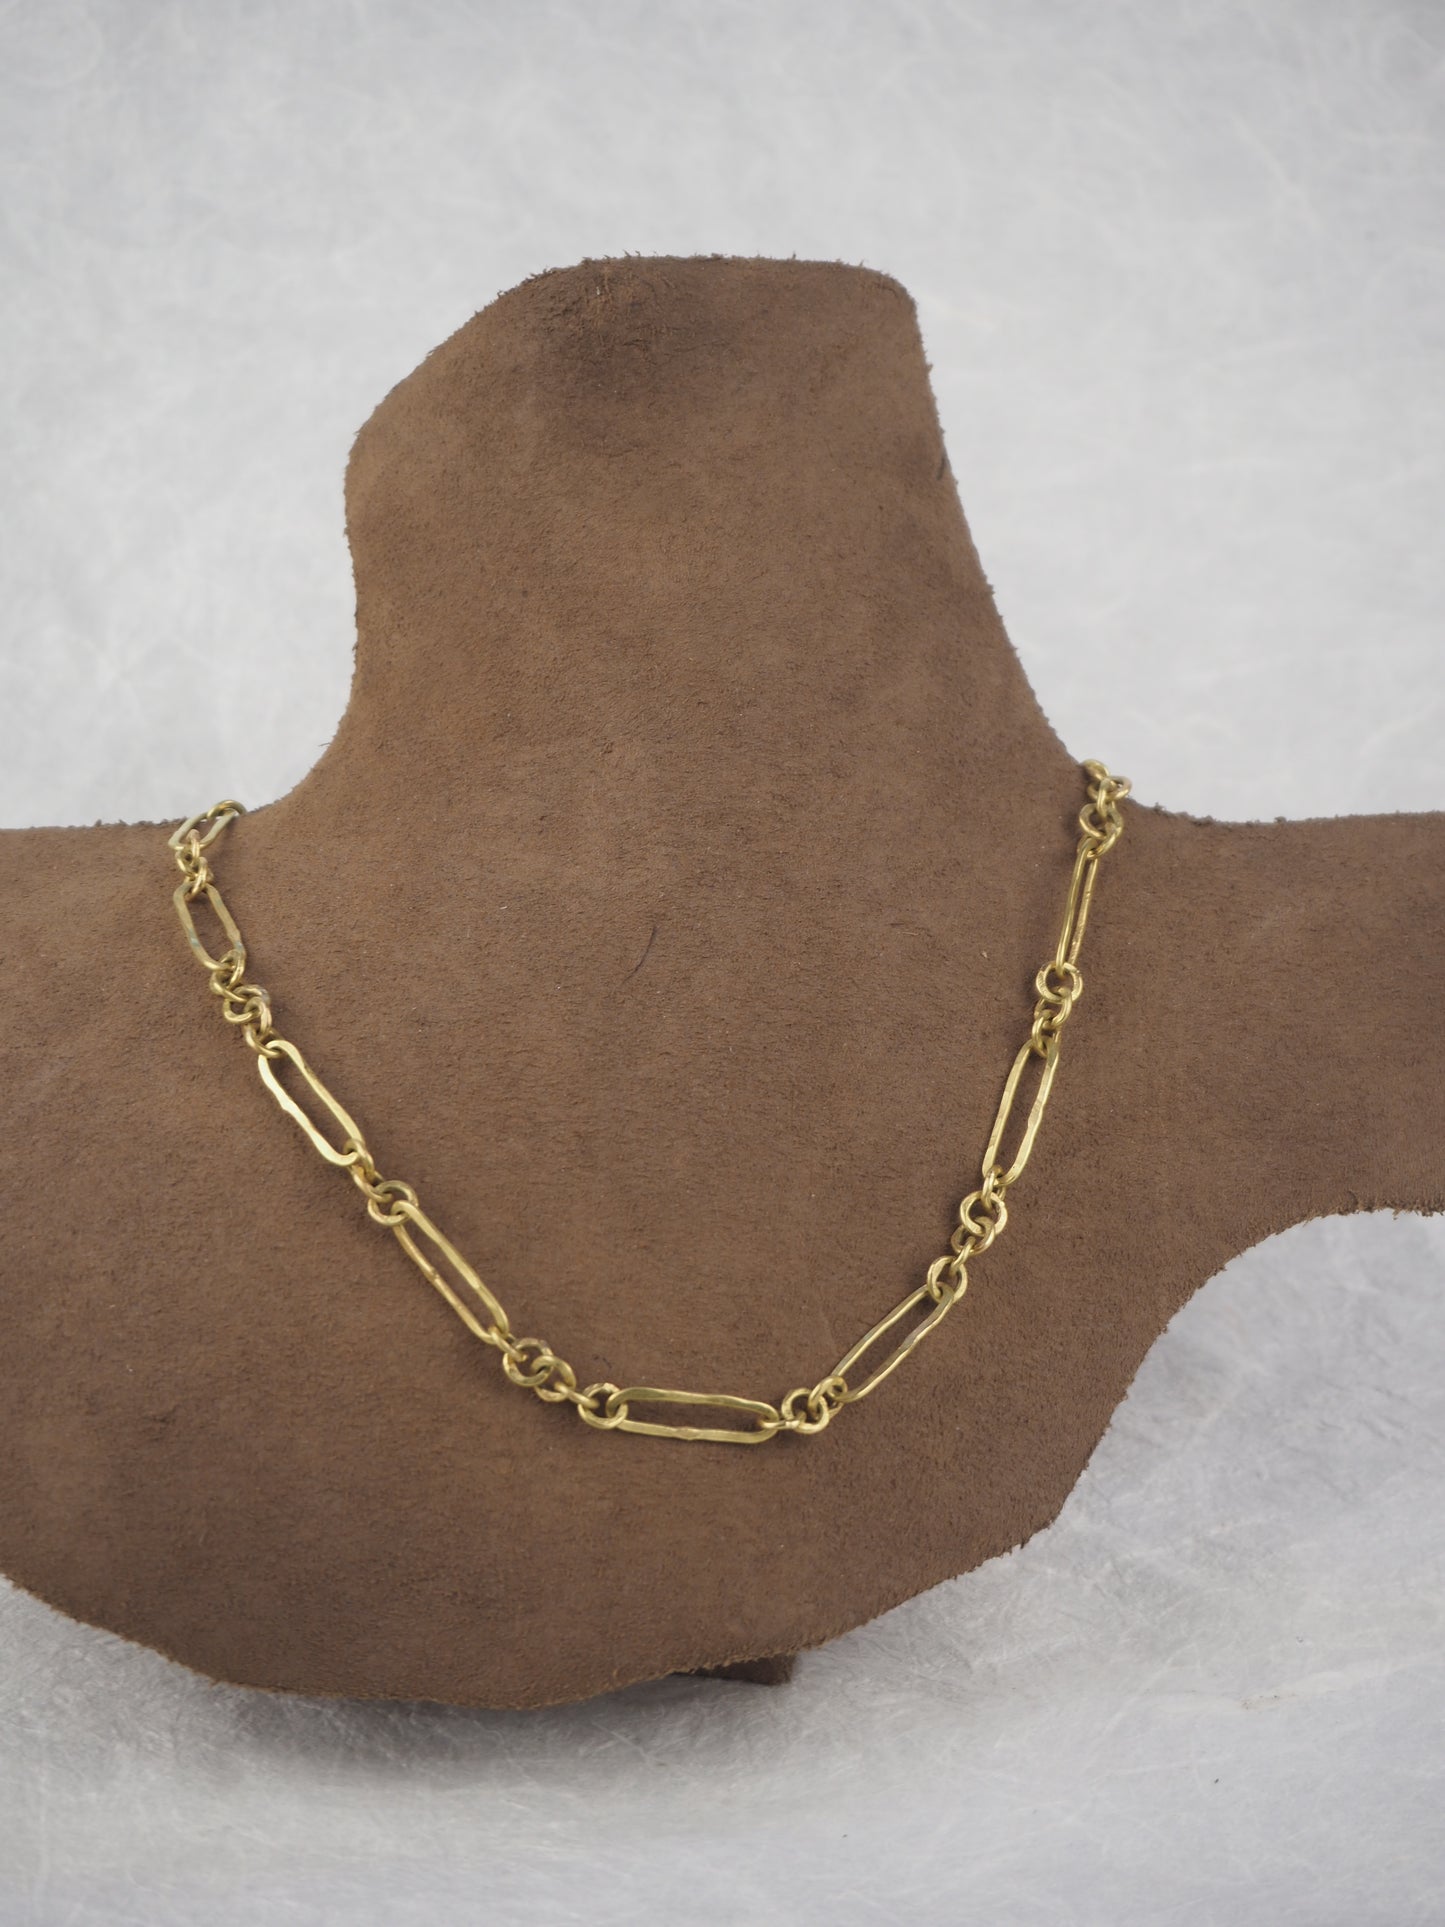 Royle, Guy – 18ct Gold Necklace